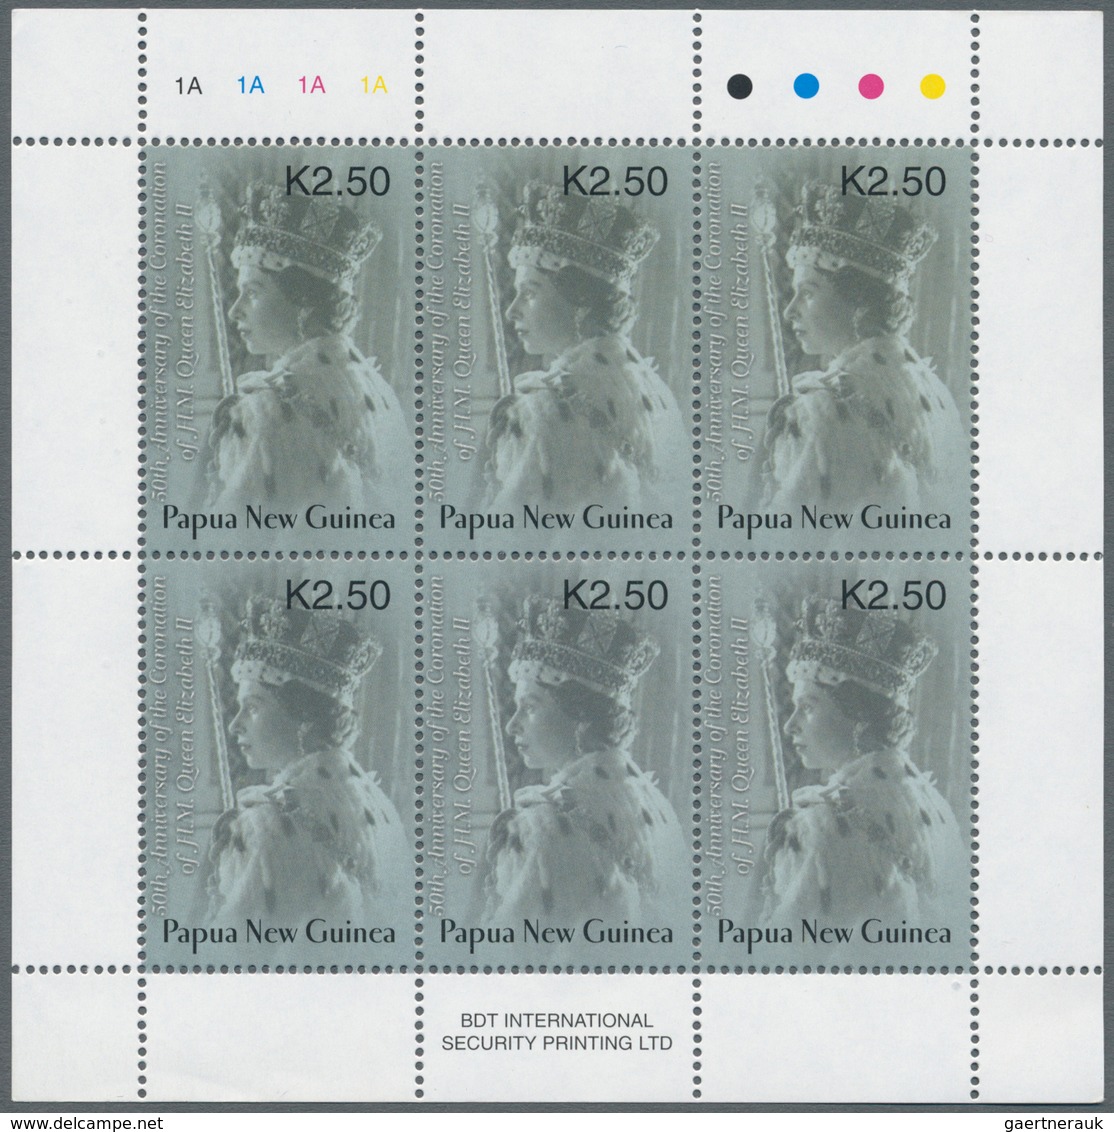 Thematik: Königtum, Adel / Royalty, Nobility: 2003, Papua New Guinea. Lot Of 3,000 Stamps "2.50k Que - Familles Royales